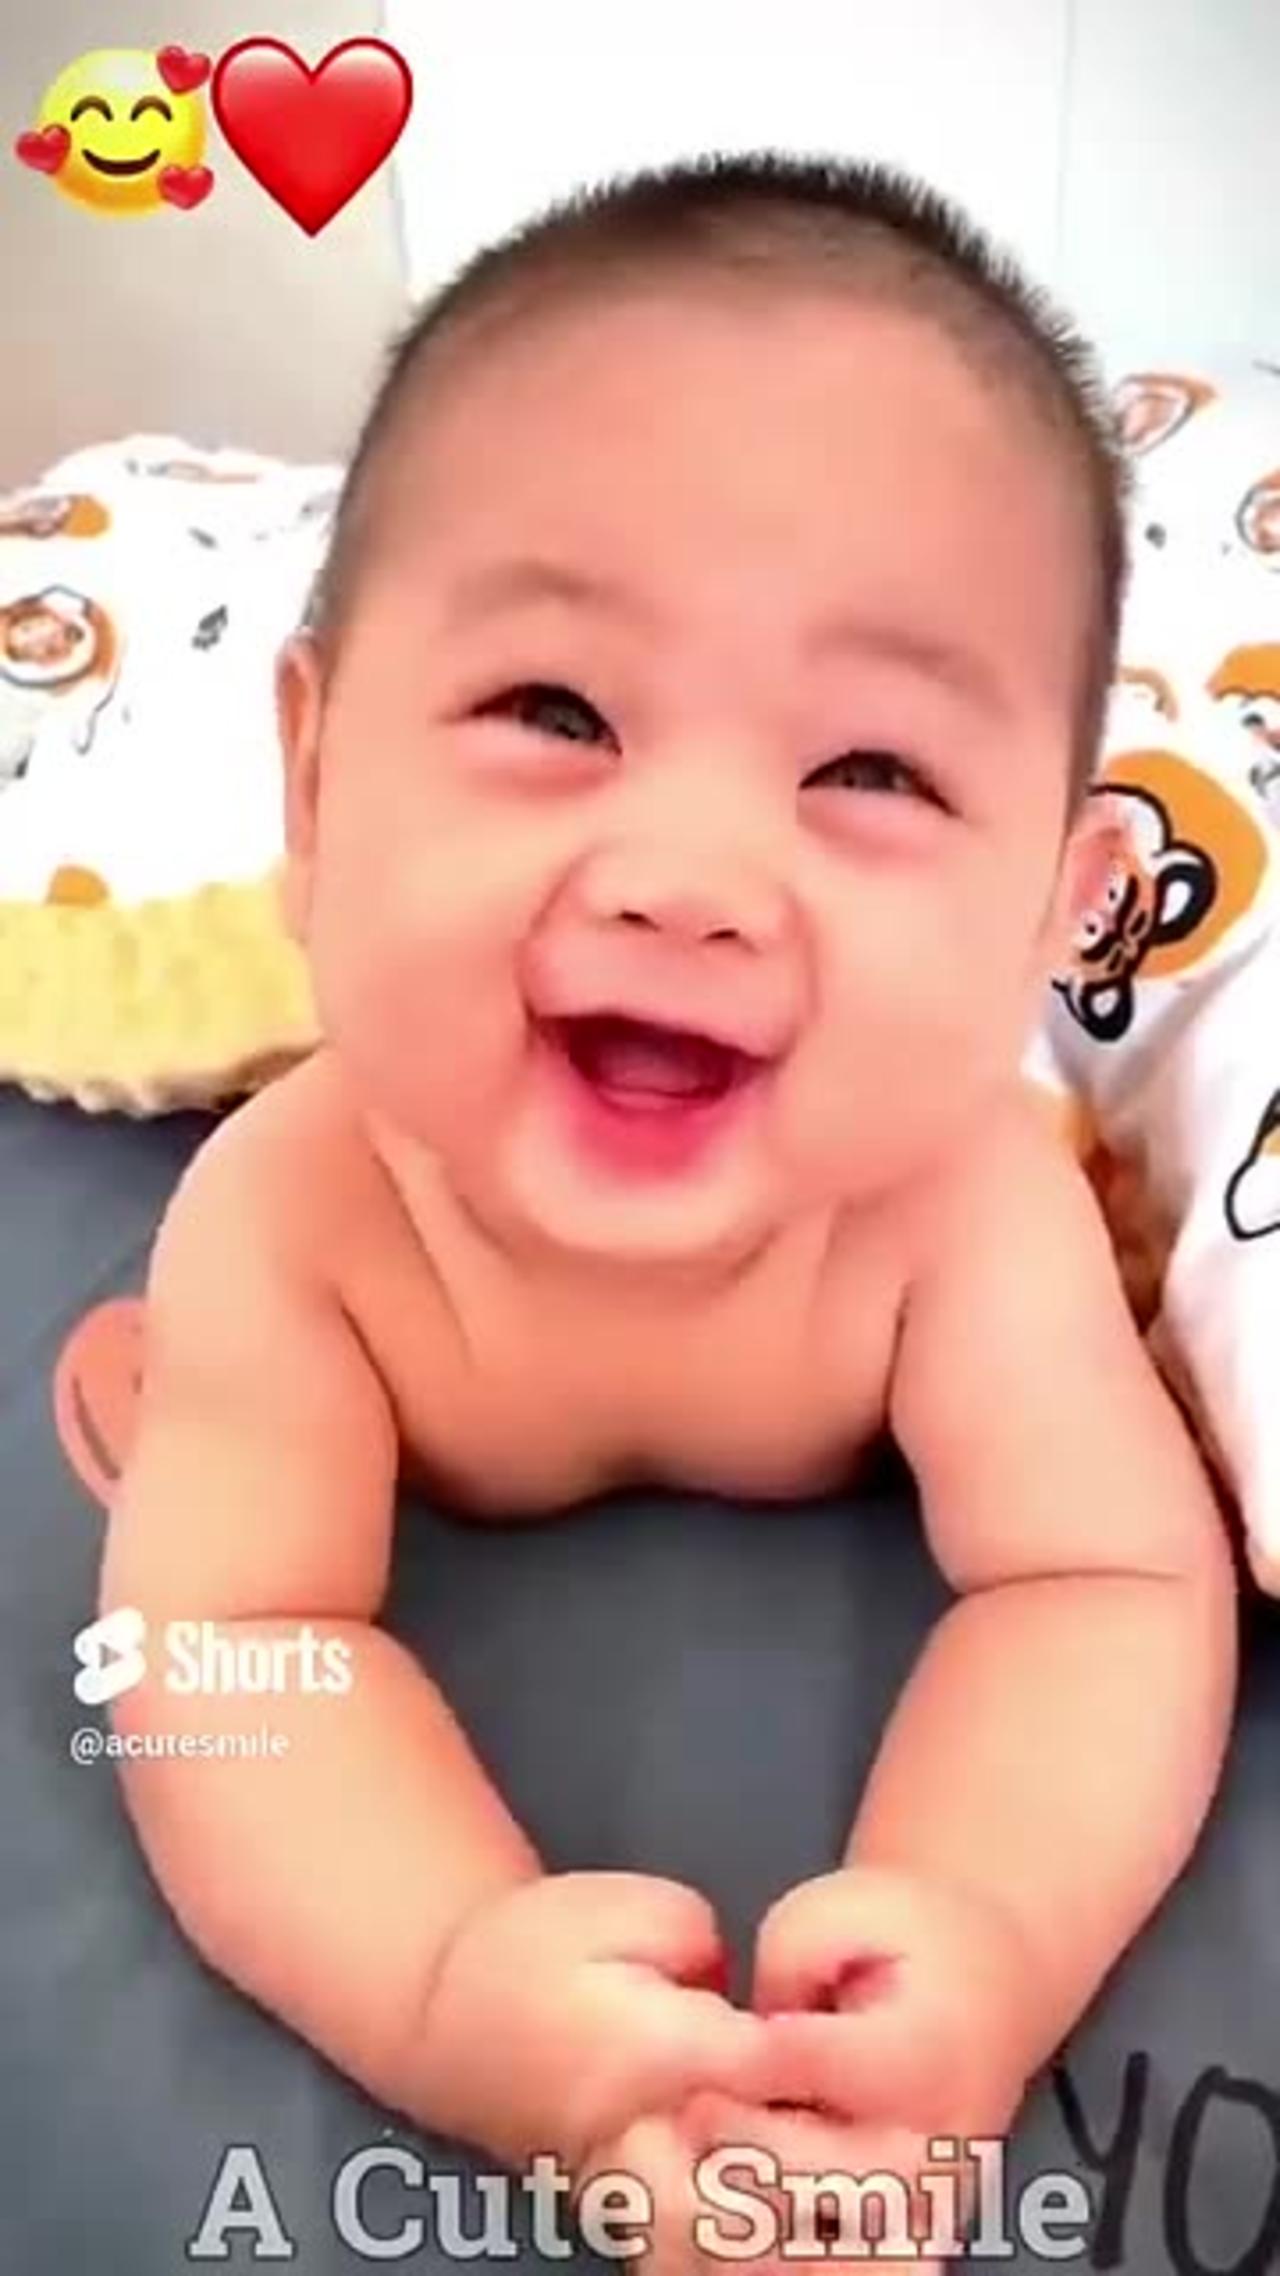 Cute babies laughing